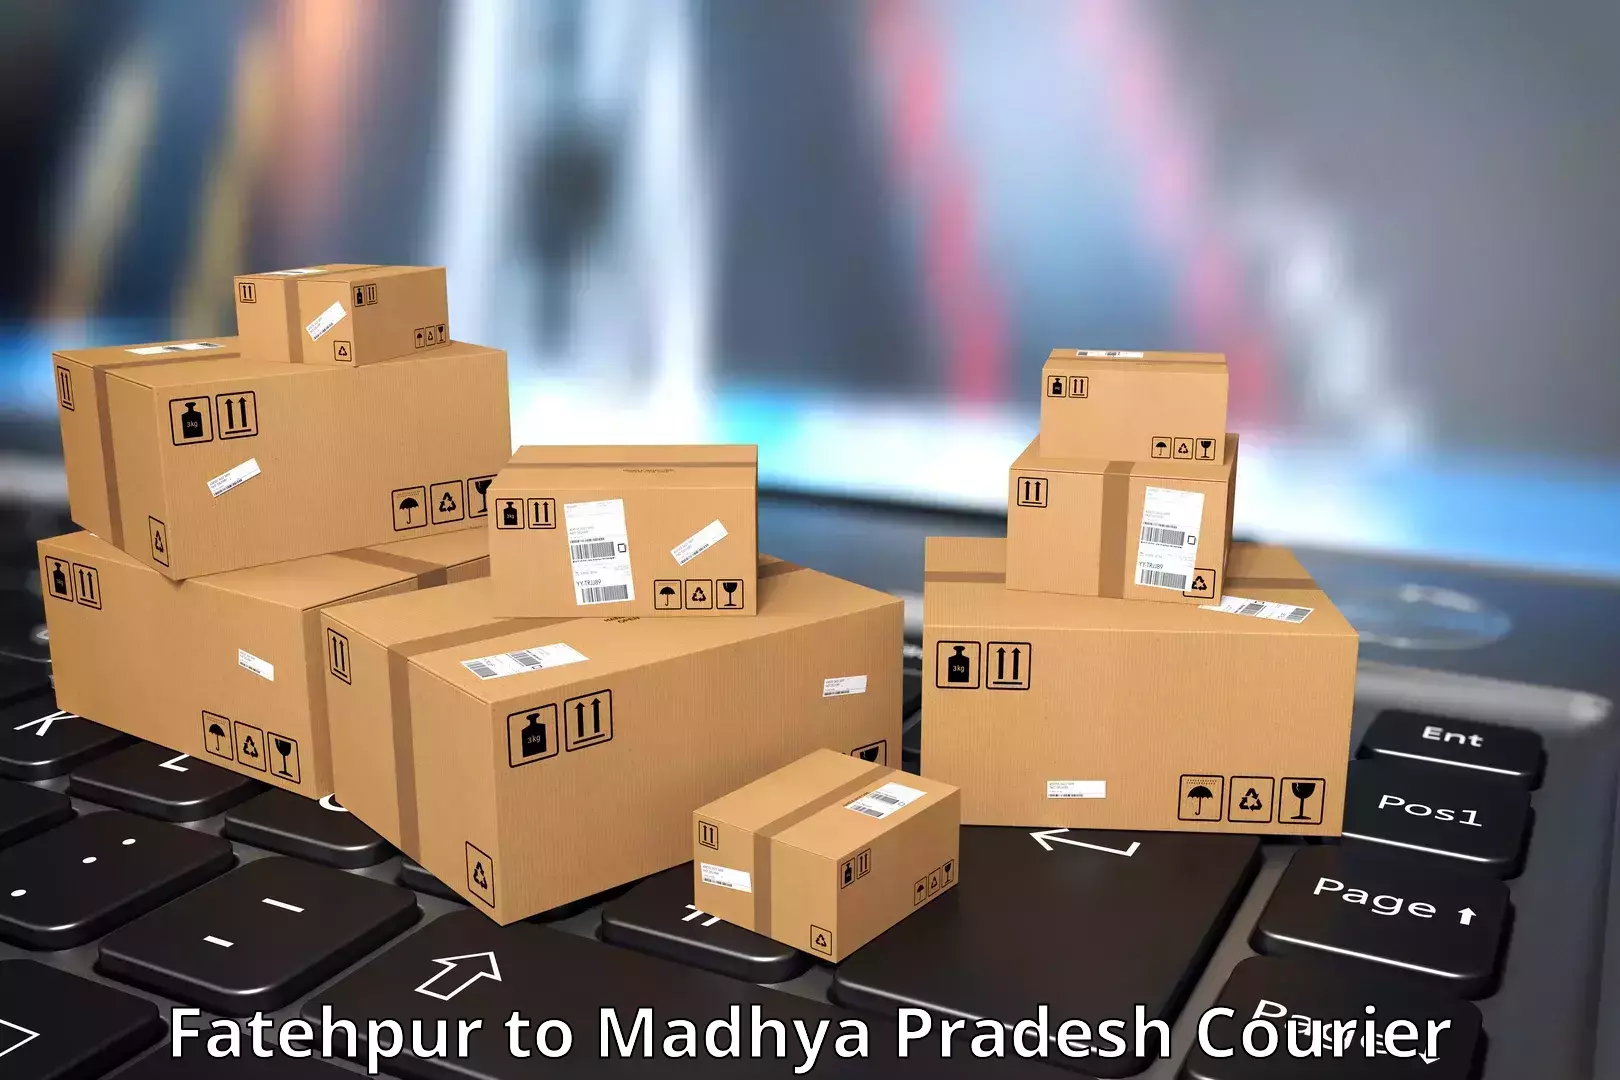 Courier service partnerships Fatehpur to Khajuraho